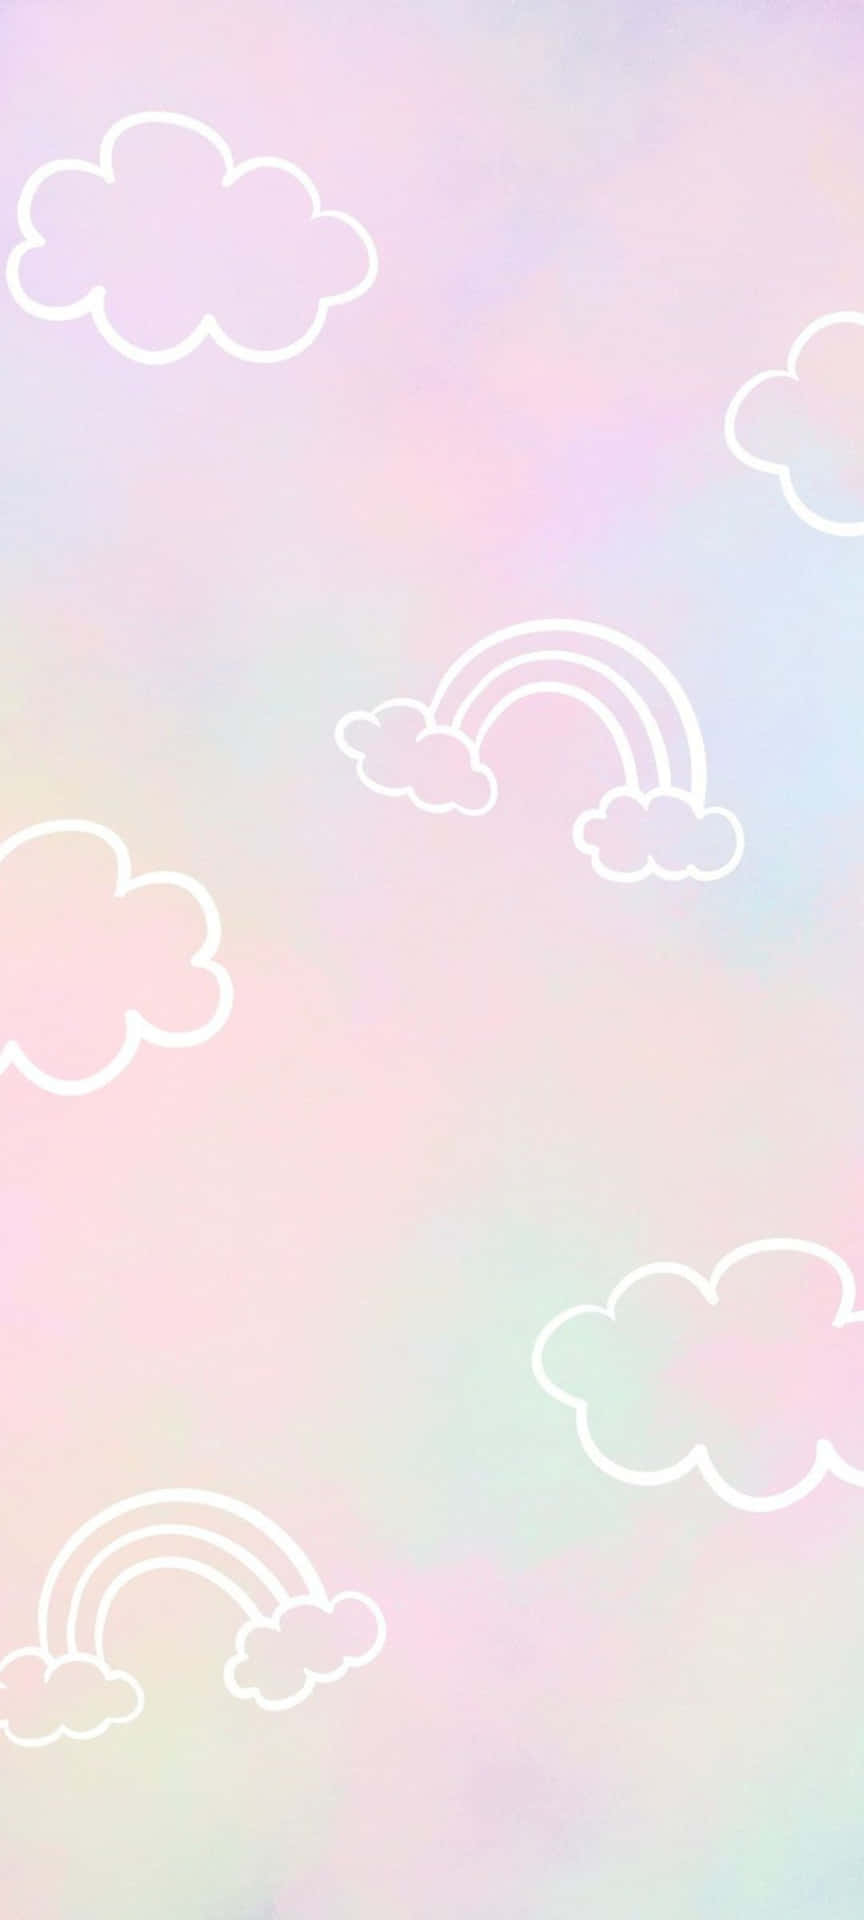 Pastel Cloudsand Rainbows Background Wallpaper